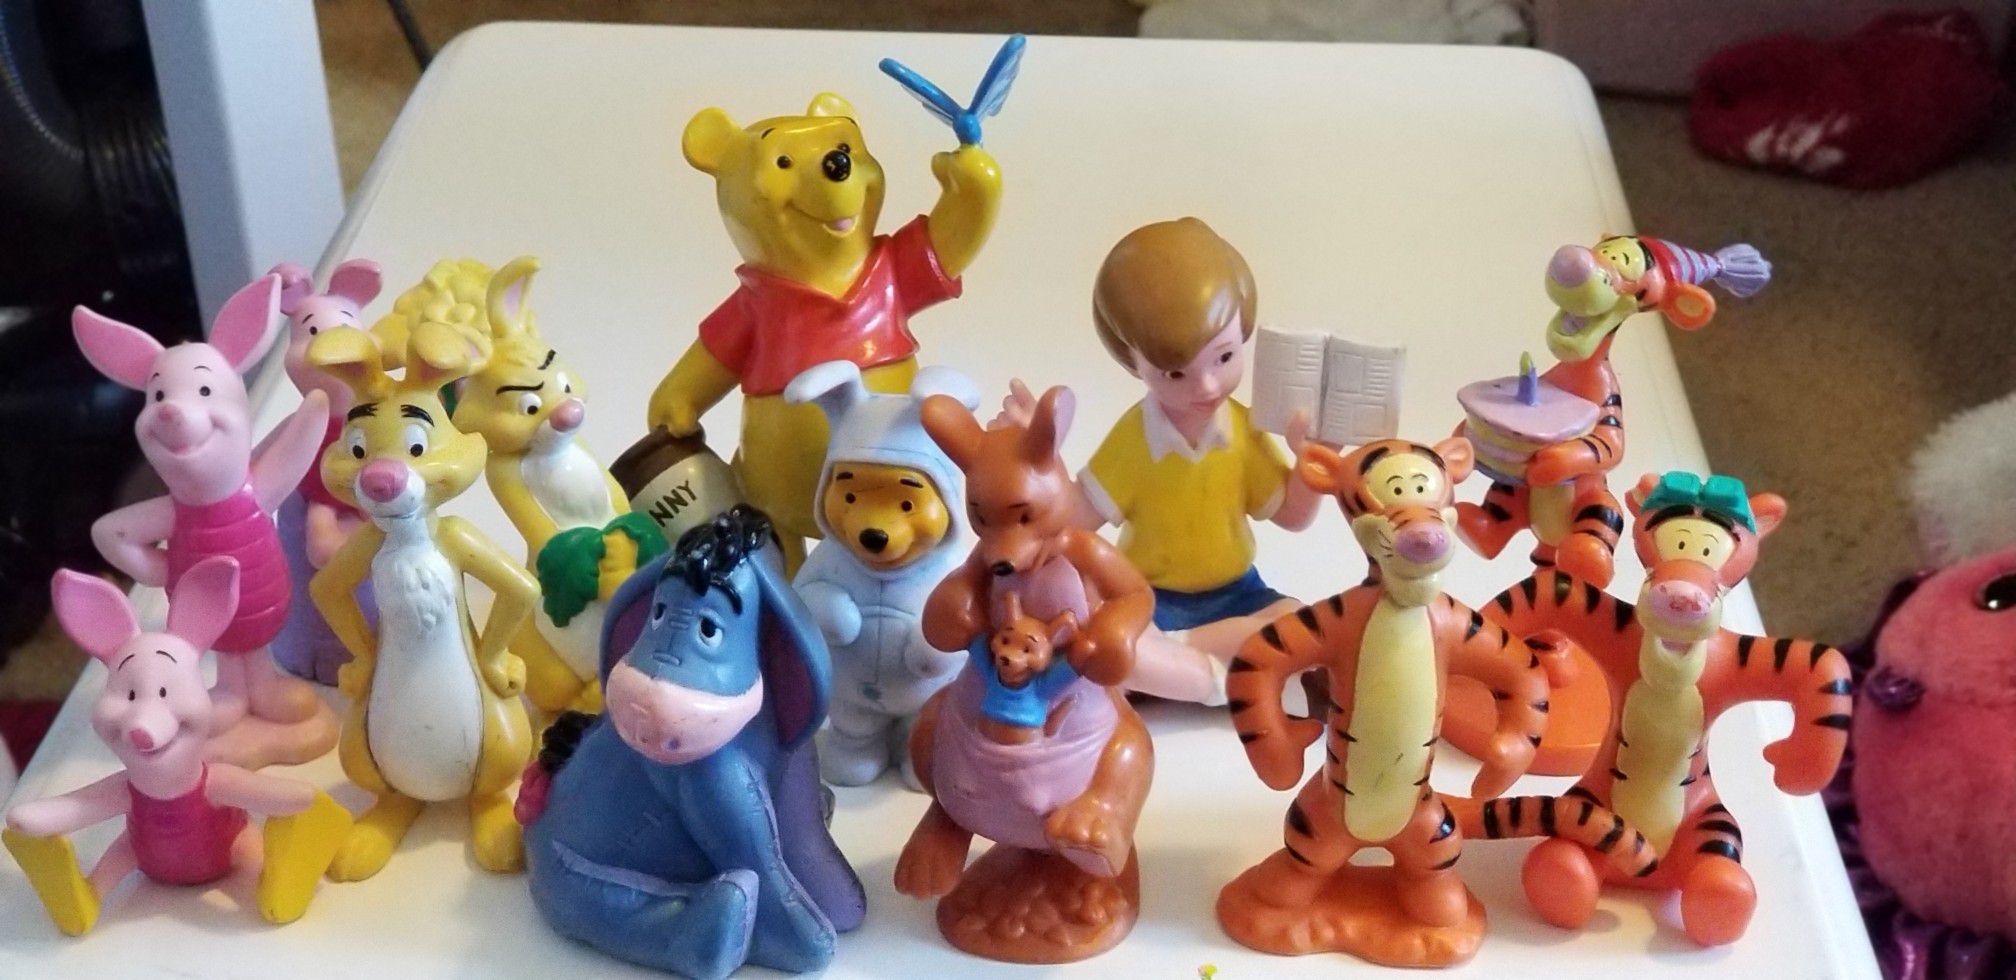 Winnie the Pooh figures